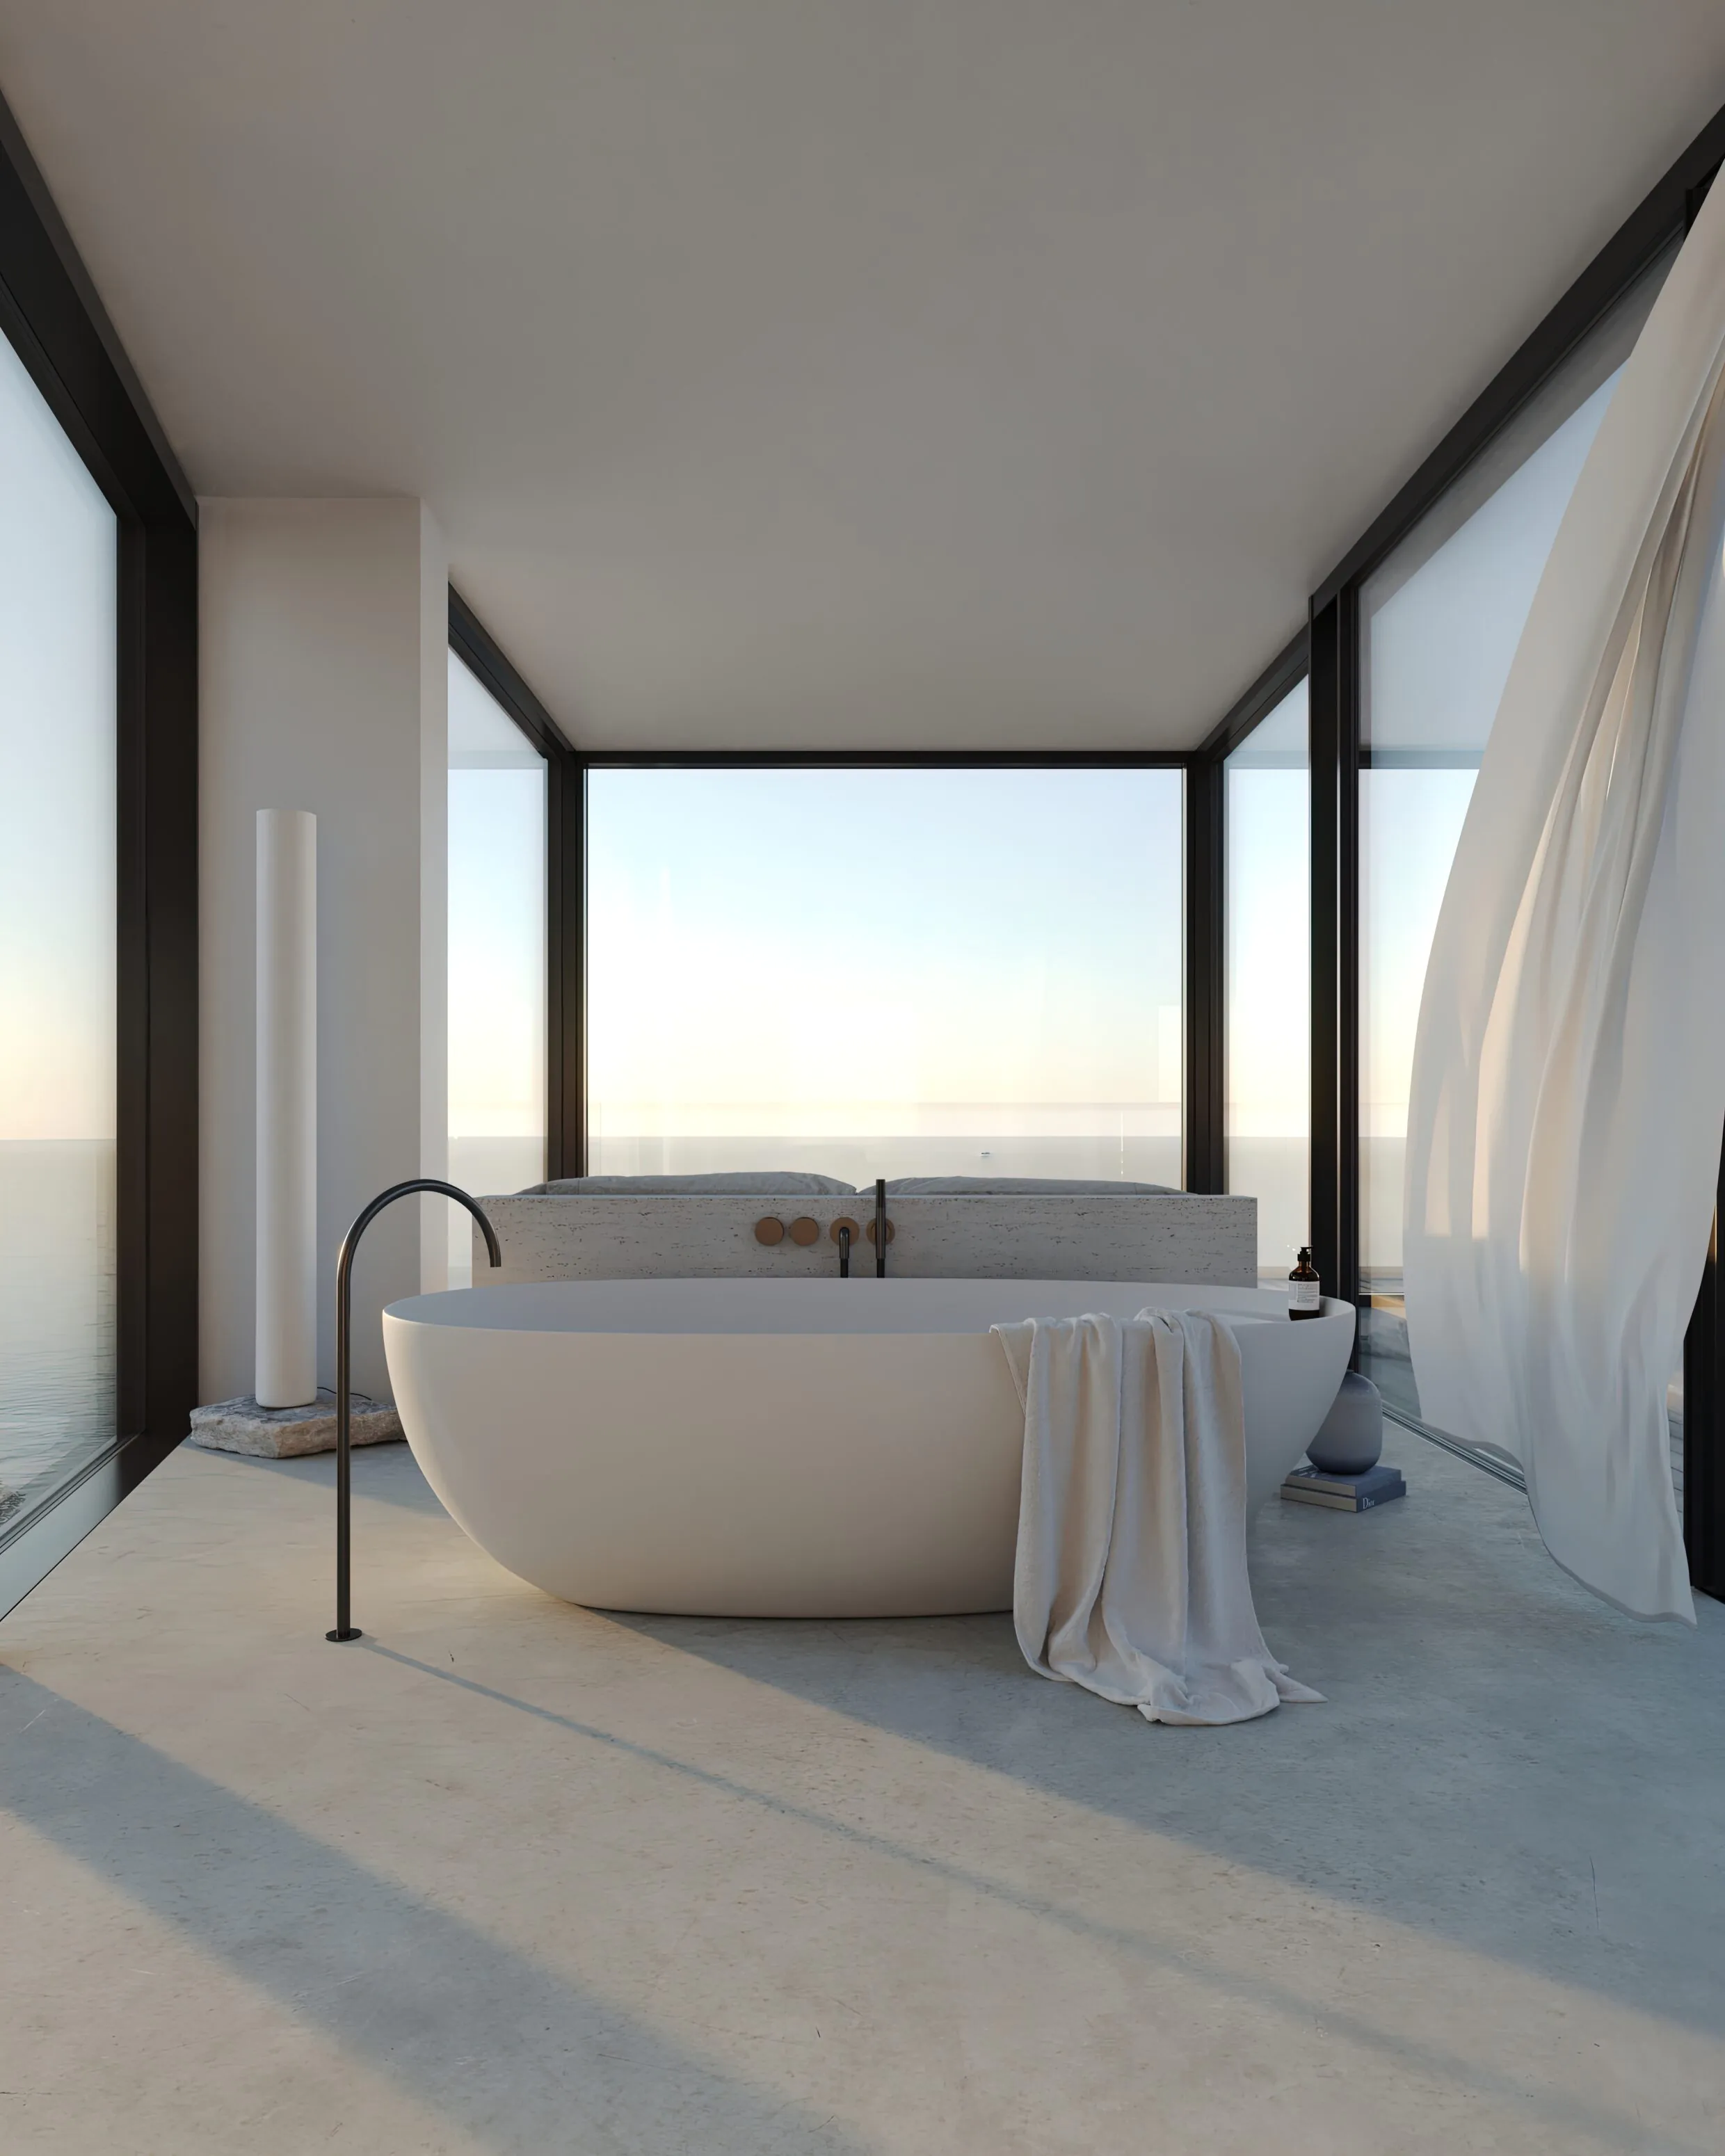 Cote d'Azur Villa вид на окна из ванной